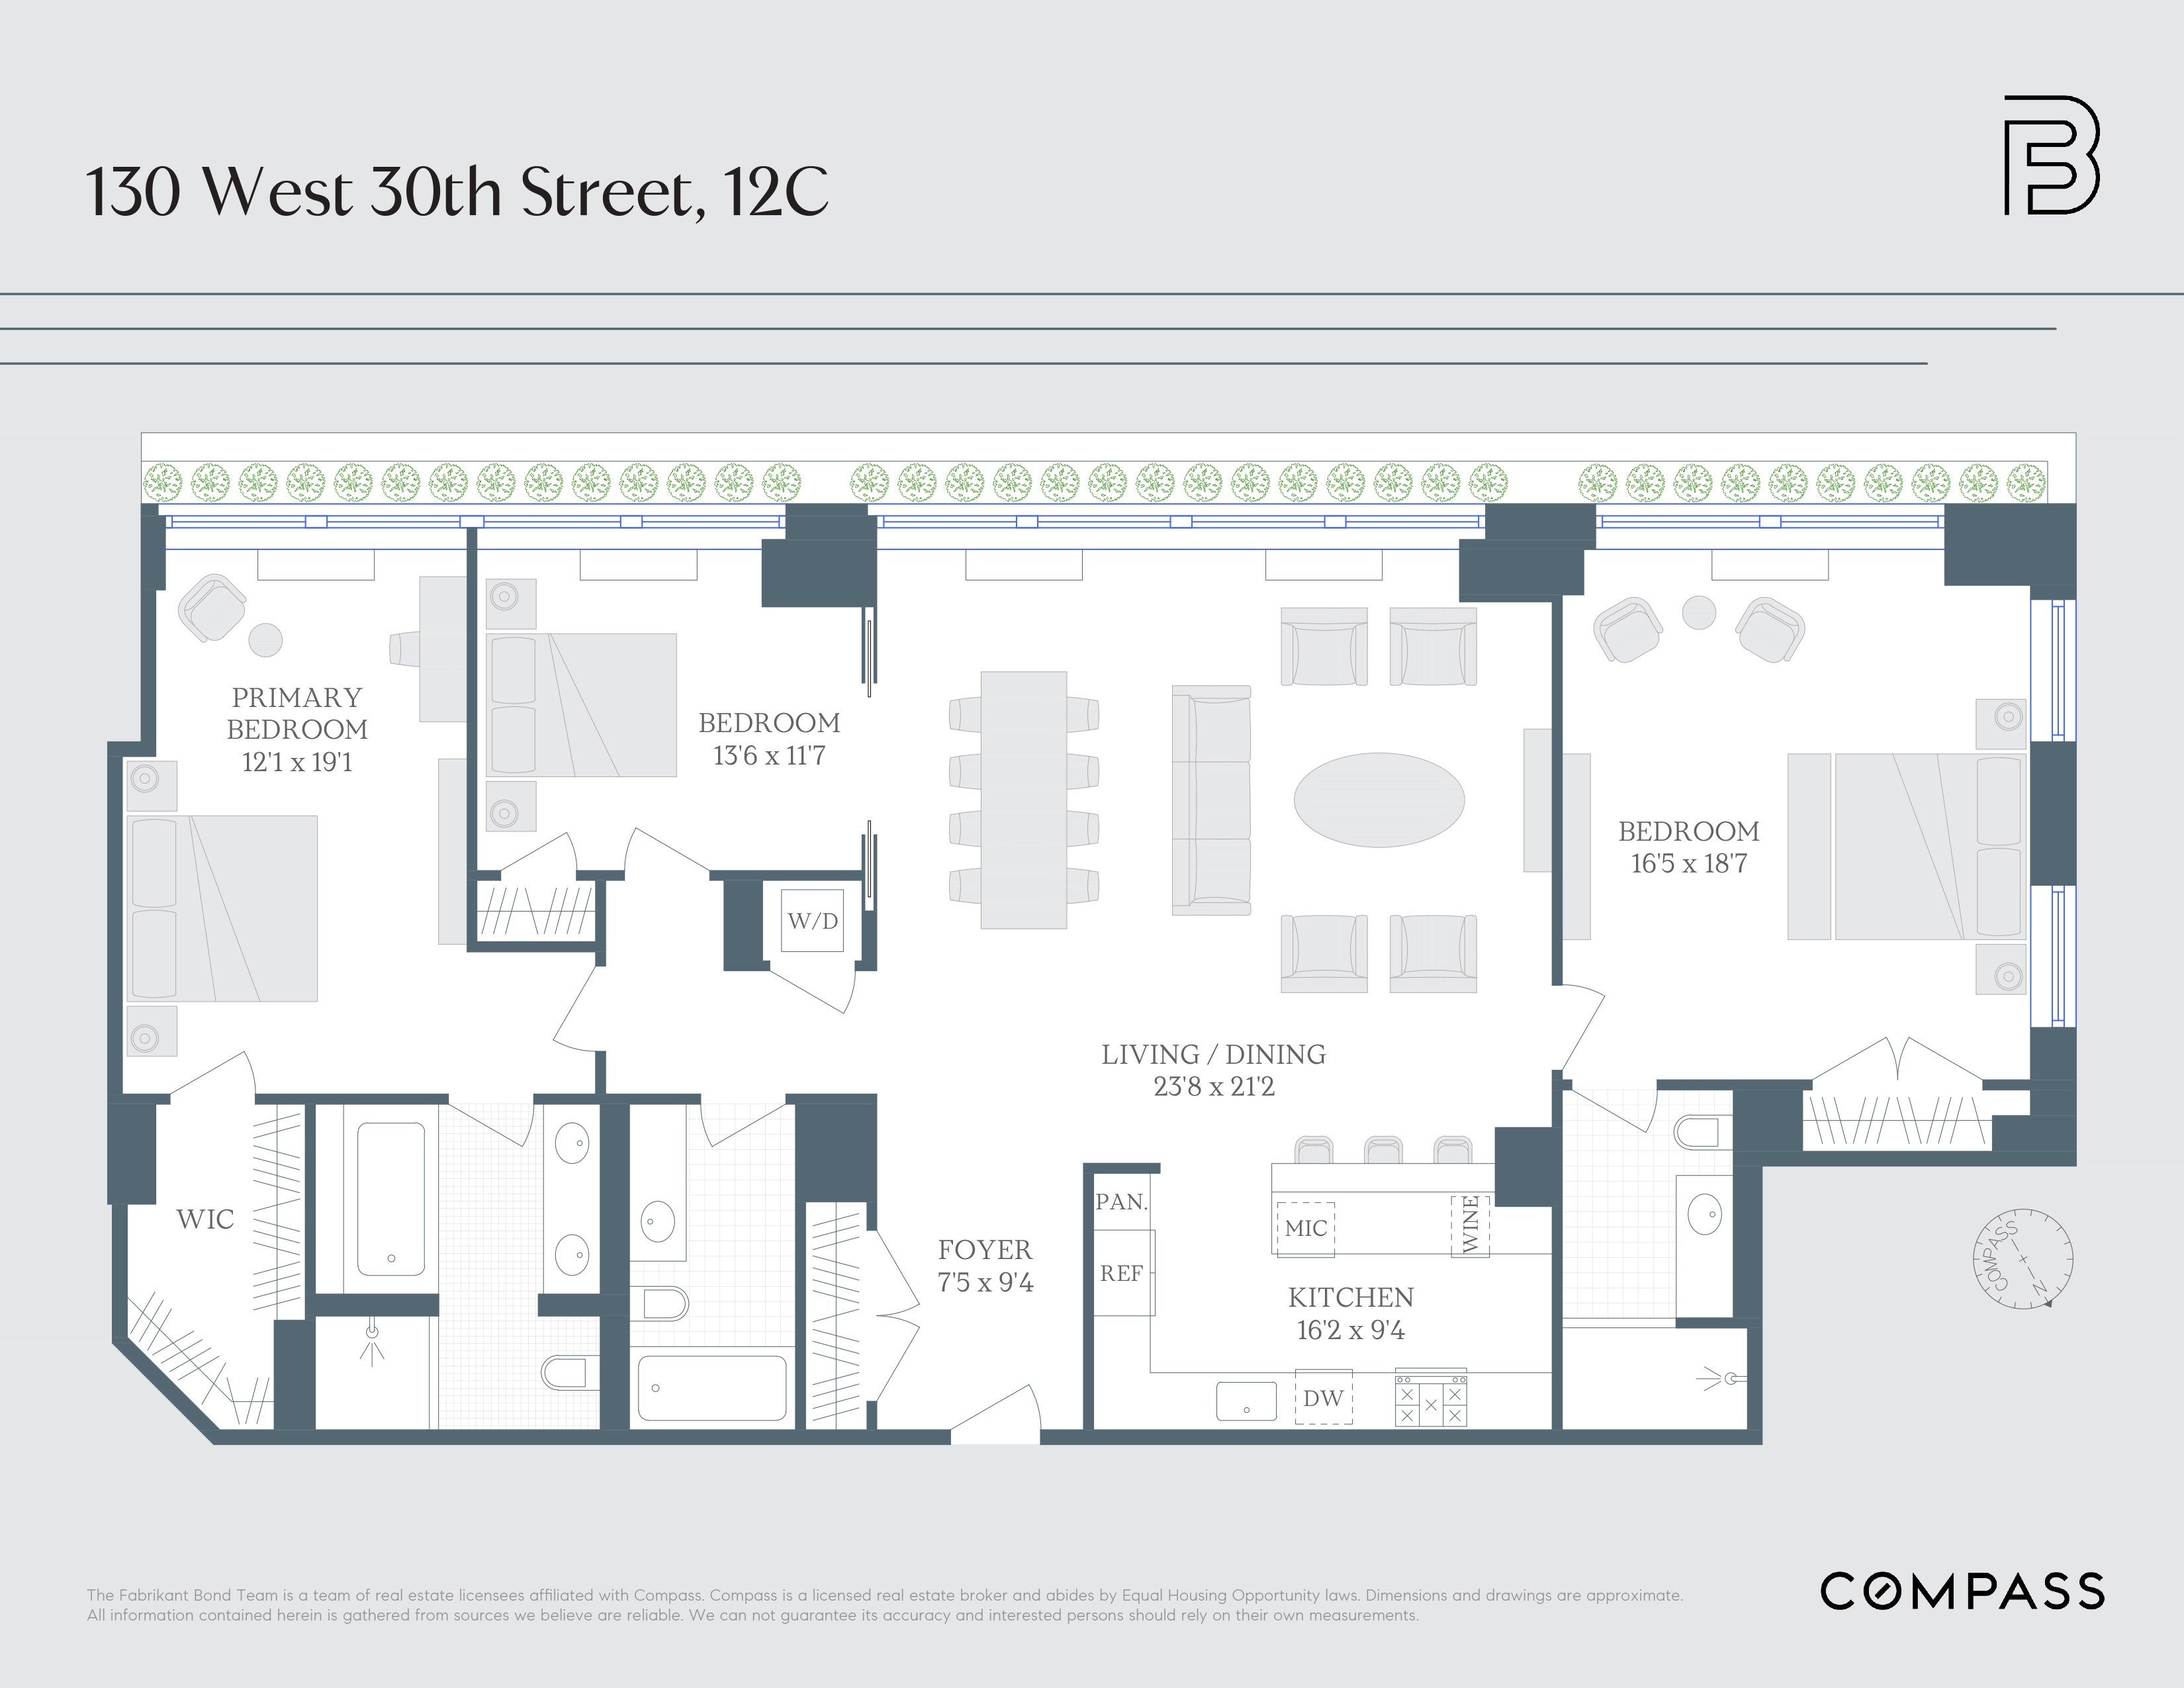 Floorplan for 130 West 30th Street, 12C